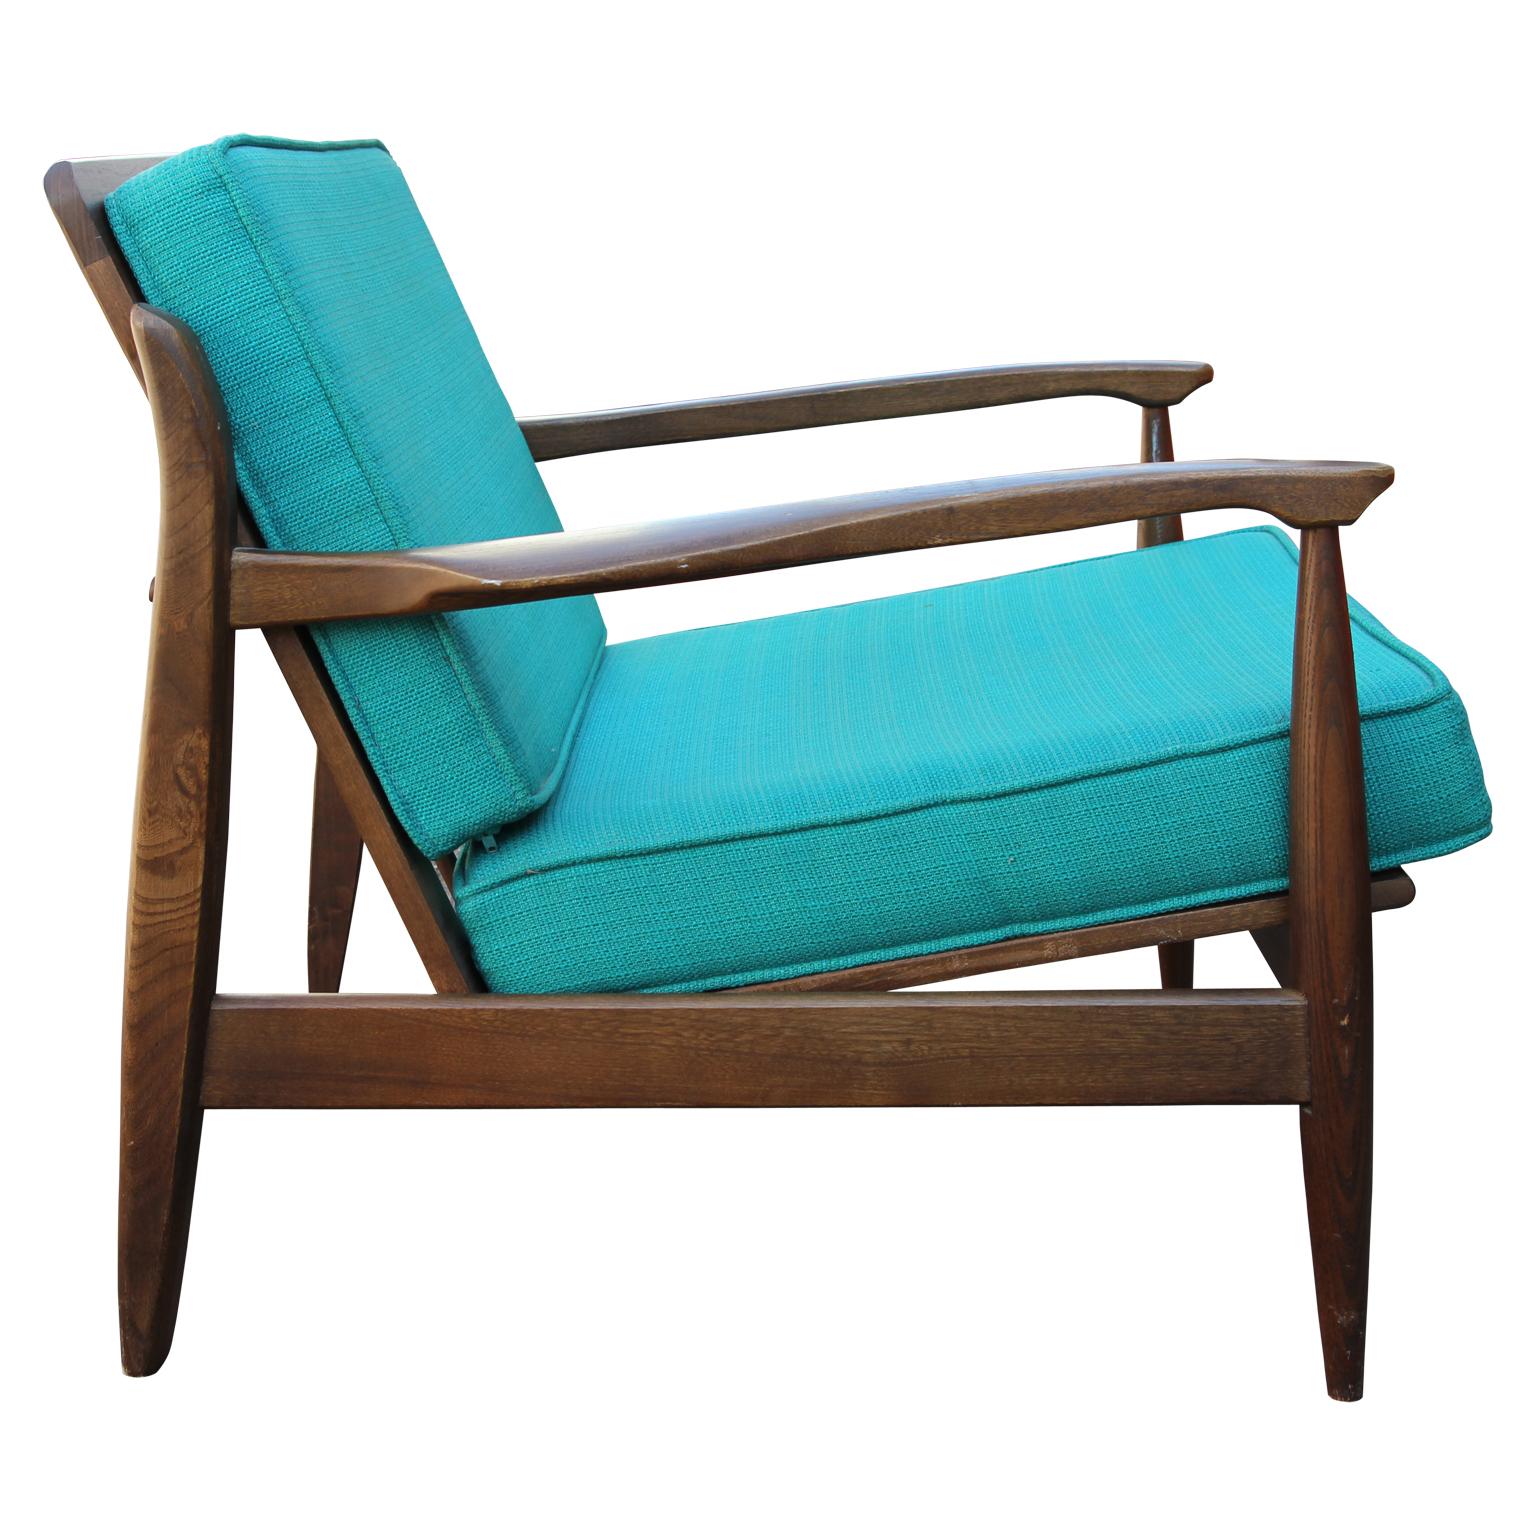 American Modern Danish Style Blue Cushioned Teak Lounge Chair